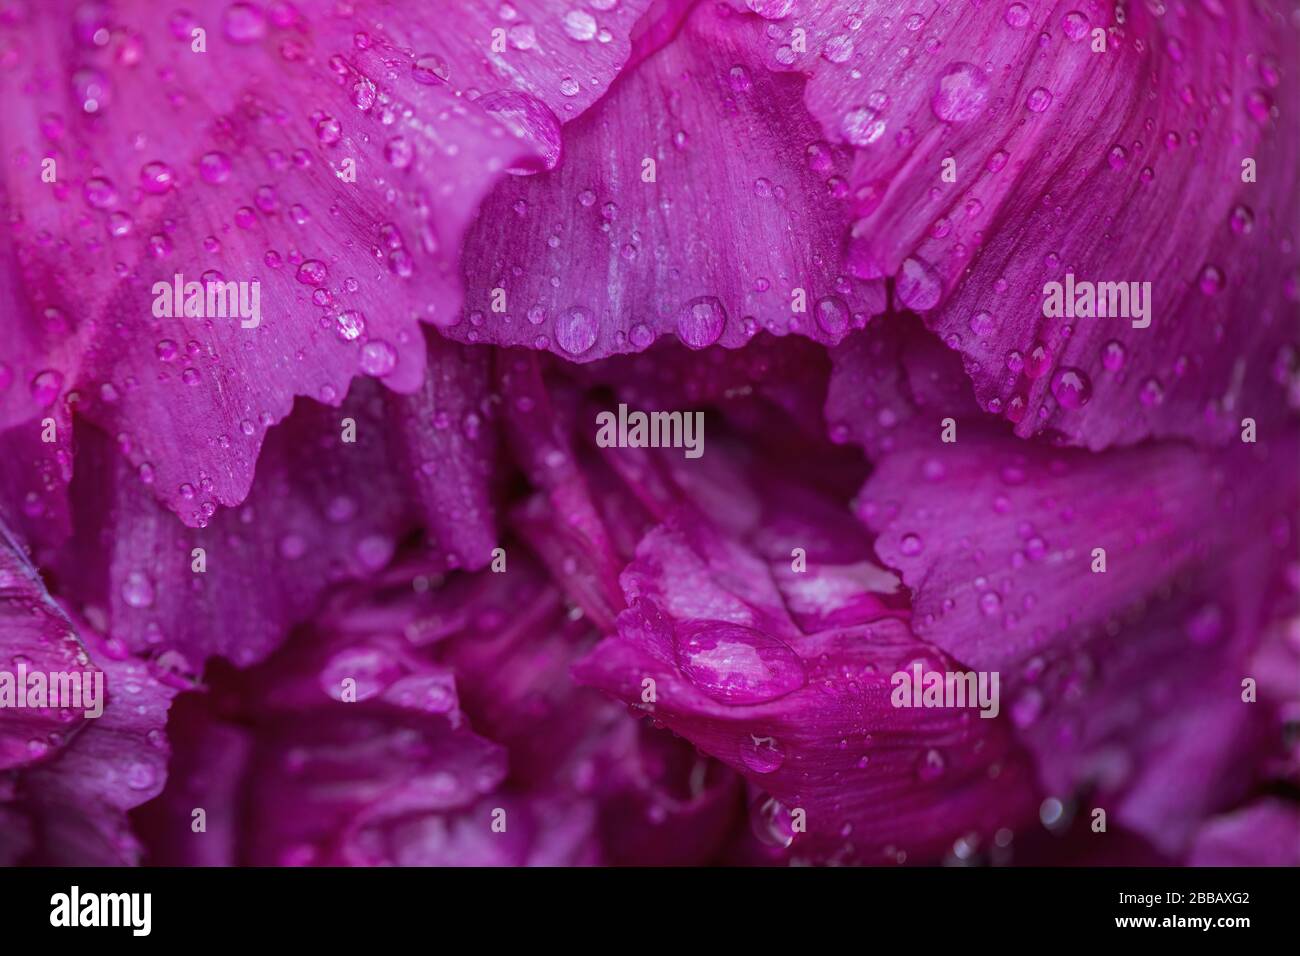 Macro image of a Peony flower on a rainy day. Stock Photo